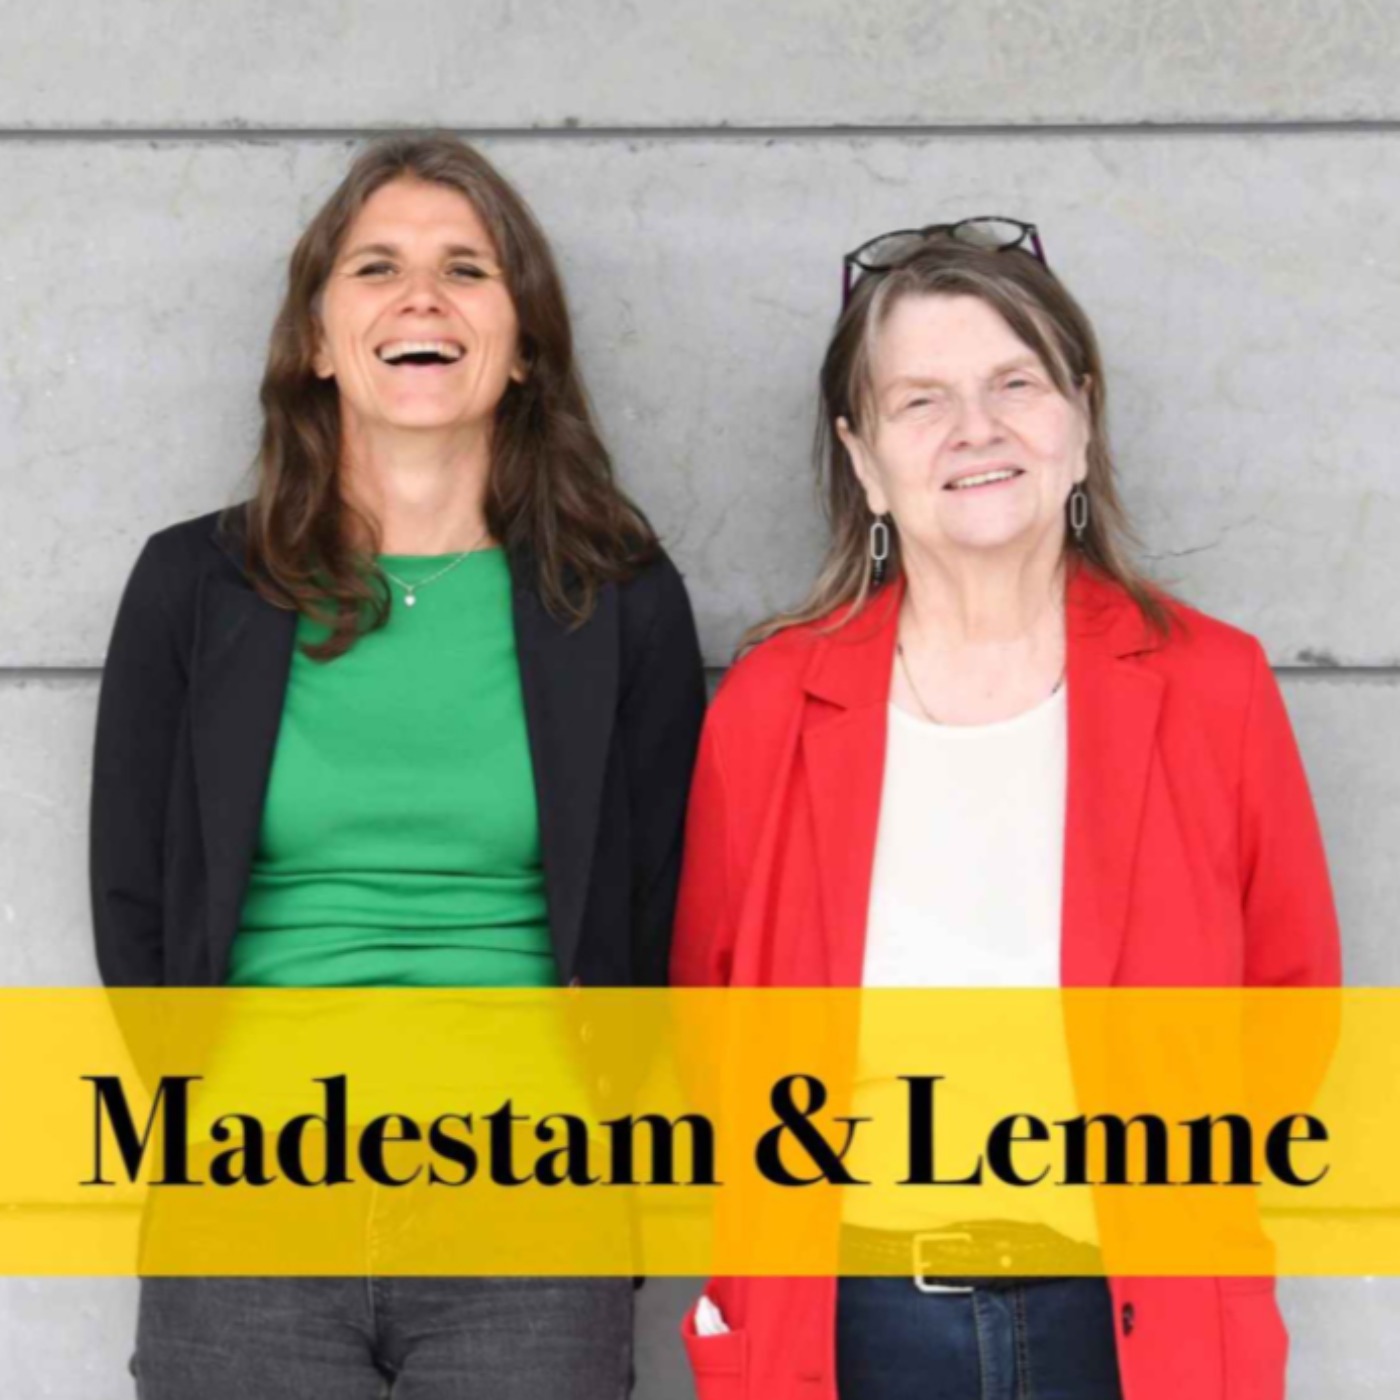 Madestam & Lemne om det svenska missnöjet